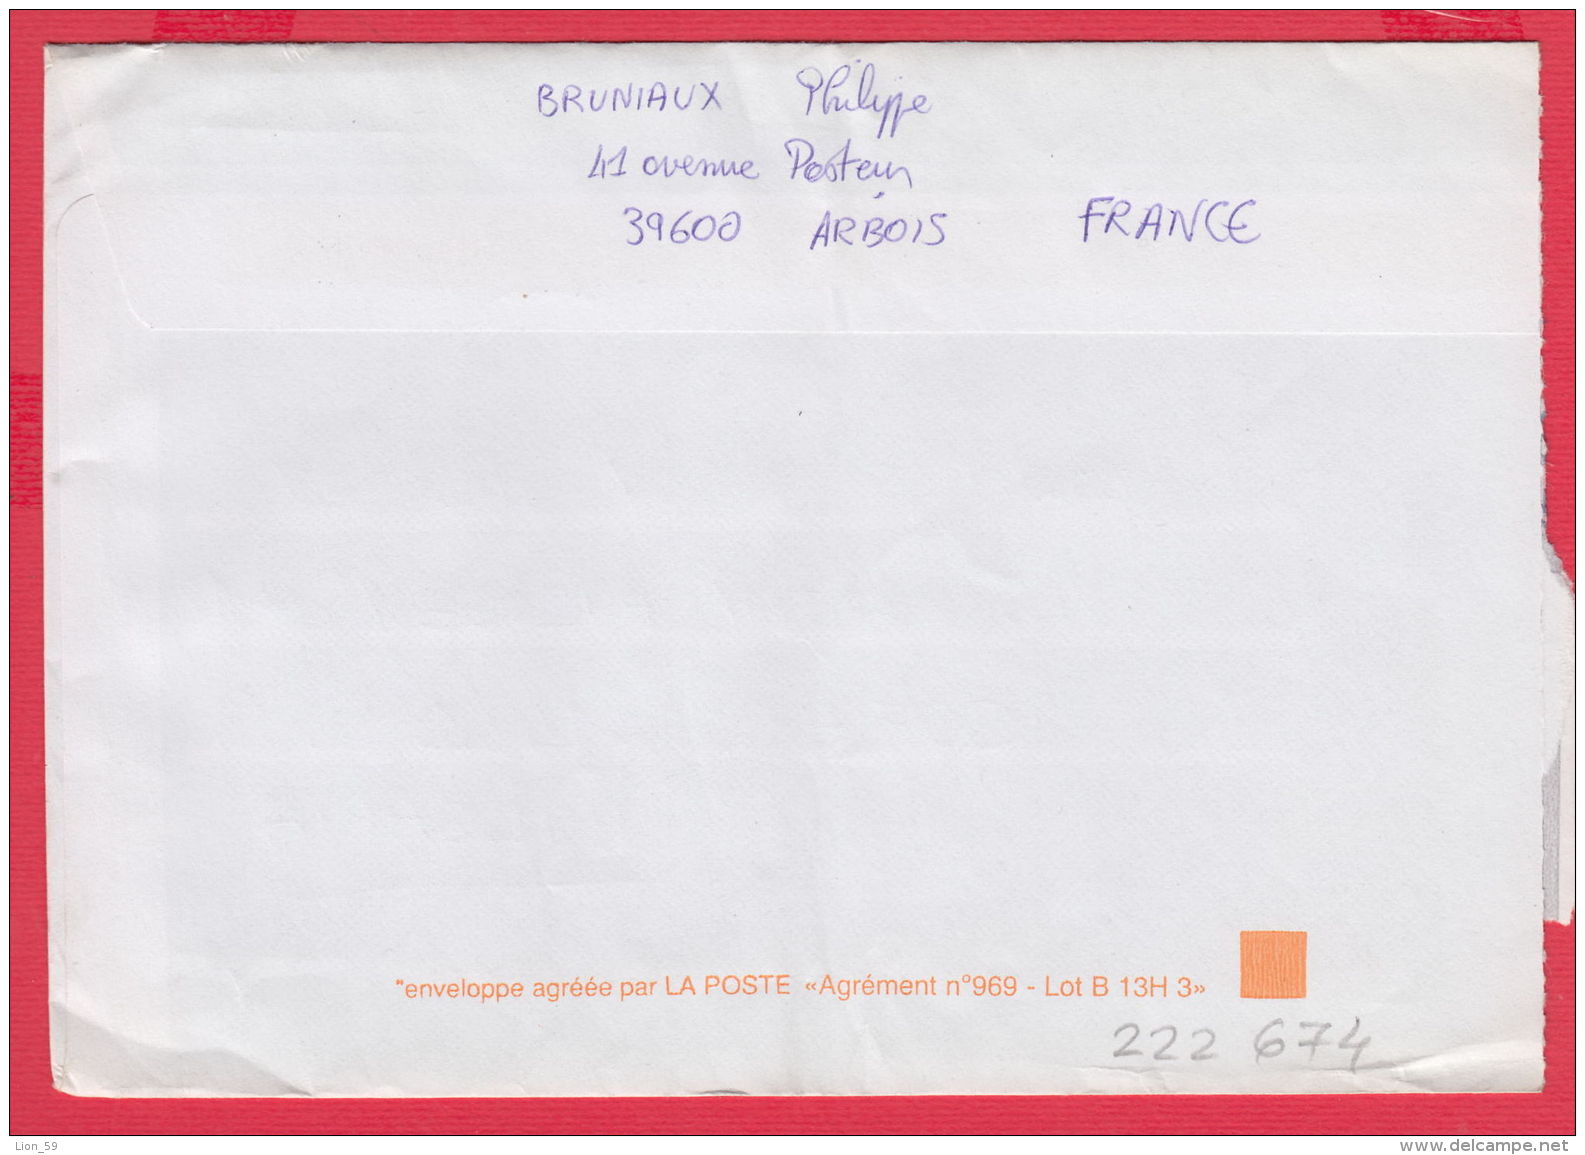 222674 / 2006 - 0.75 EUR / 4.92 Fr. STAMP LABEL ,  LONS LE SAUNIER BRIAND France Frankreich Francia TO BULGARIA - 1999-2009 Vignette Illustrate